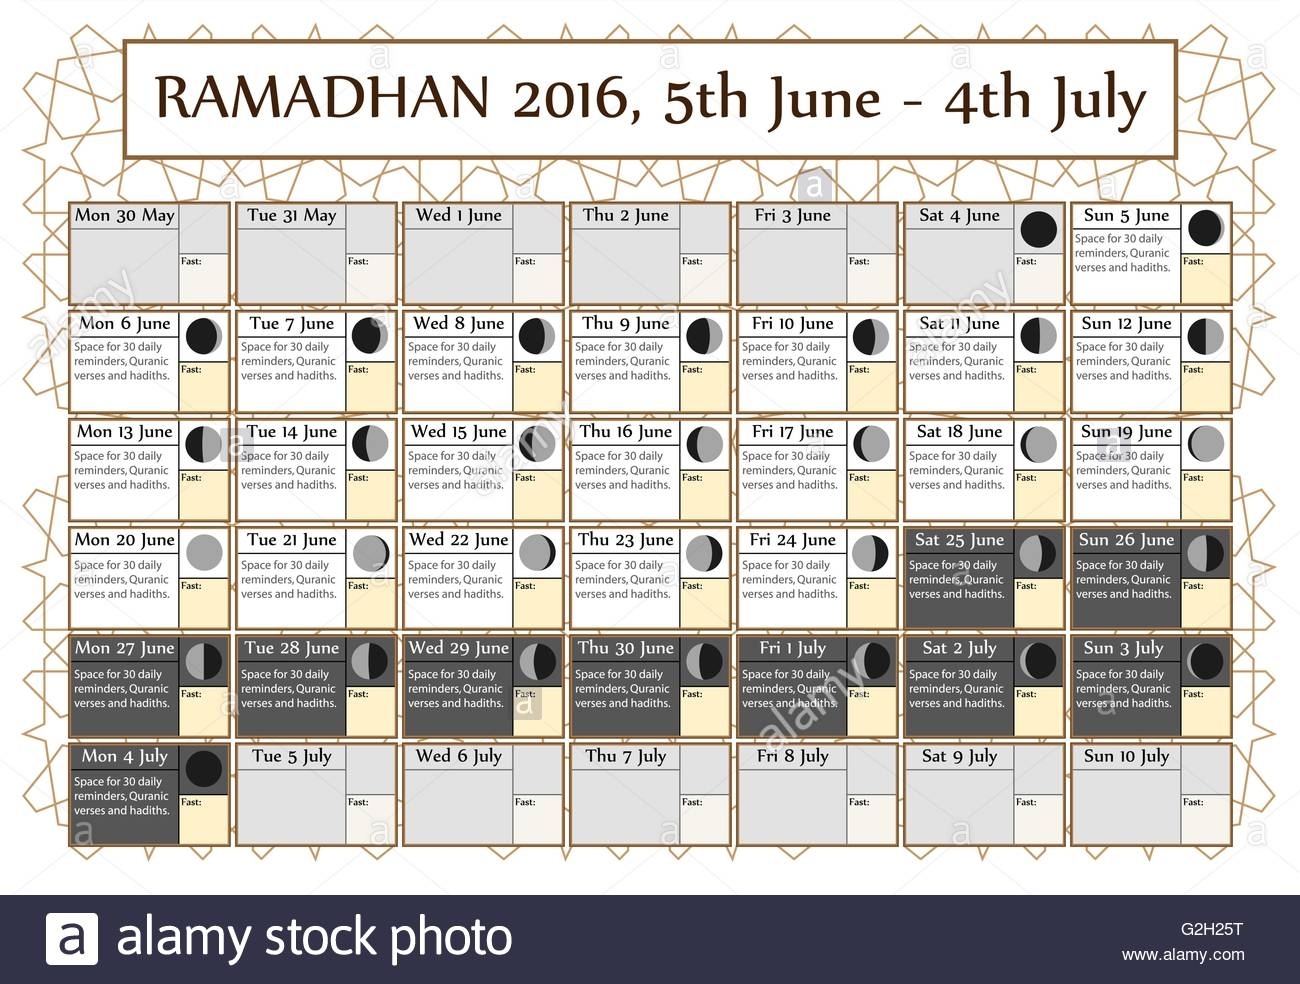 Islamic Calendar Stock Vector Images - Alamy with regard to Islamic Calander Template Lunar Cycle